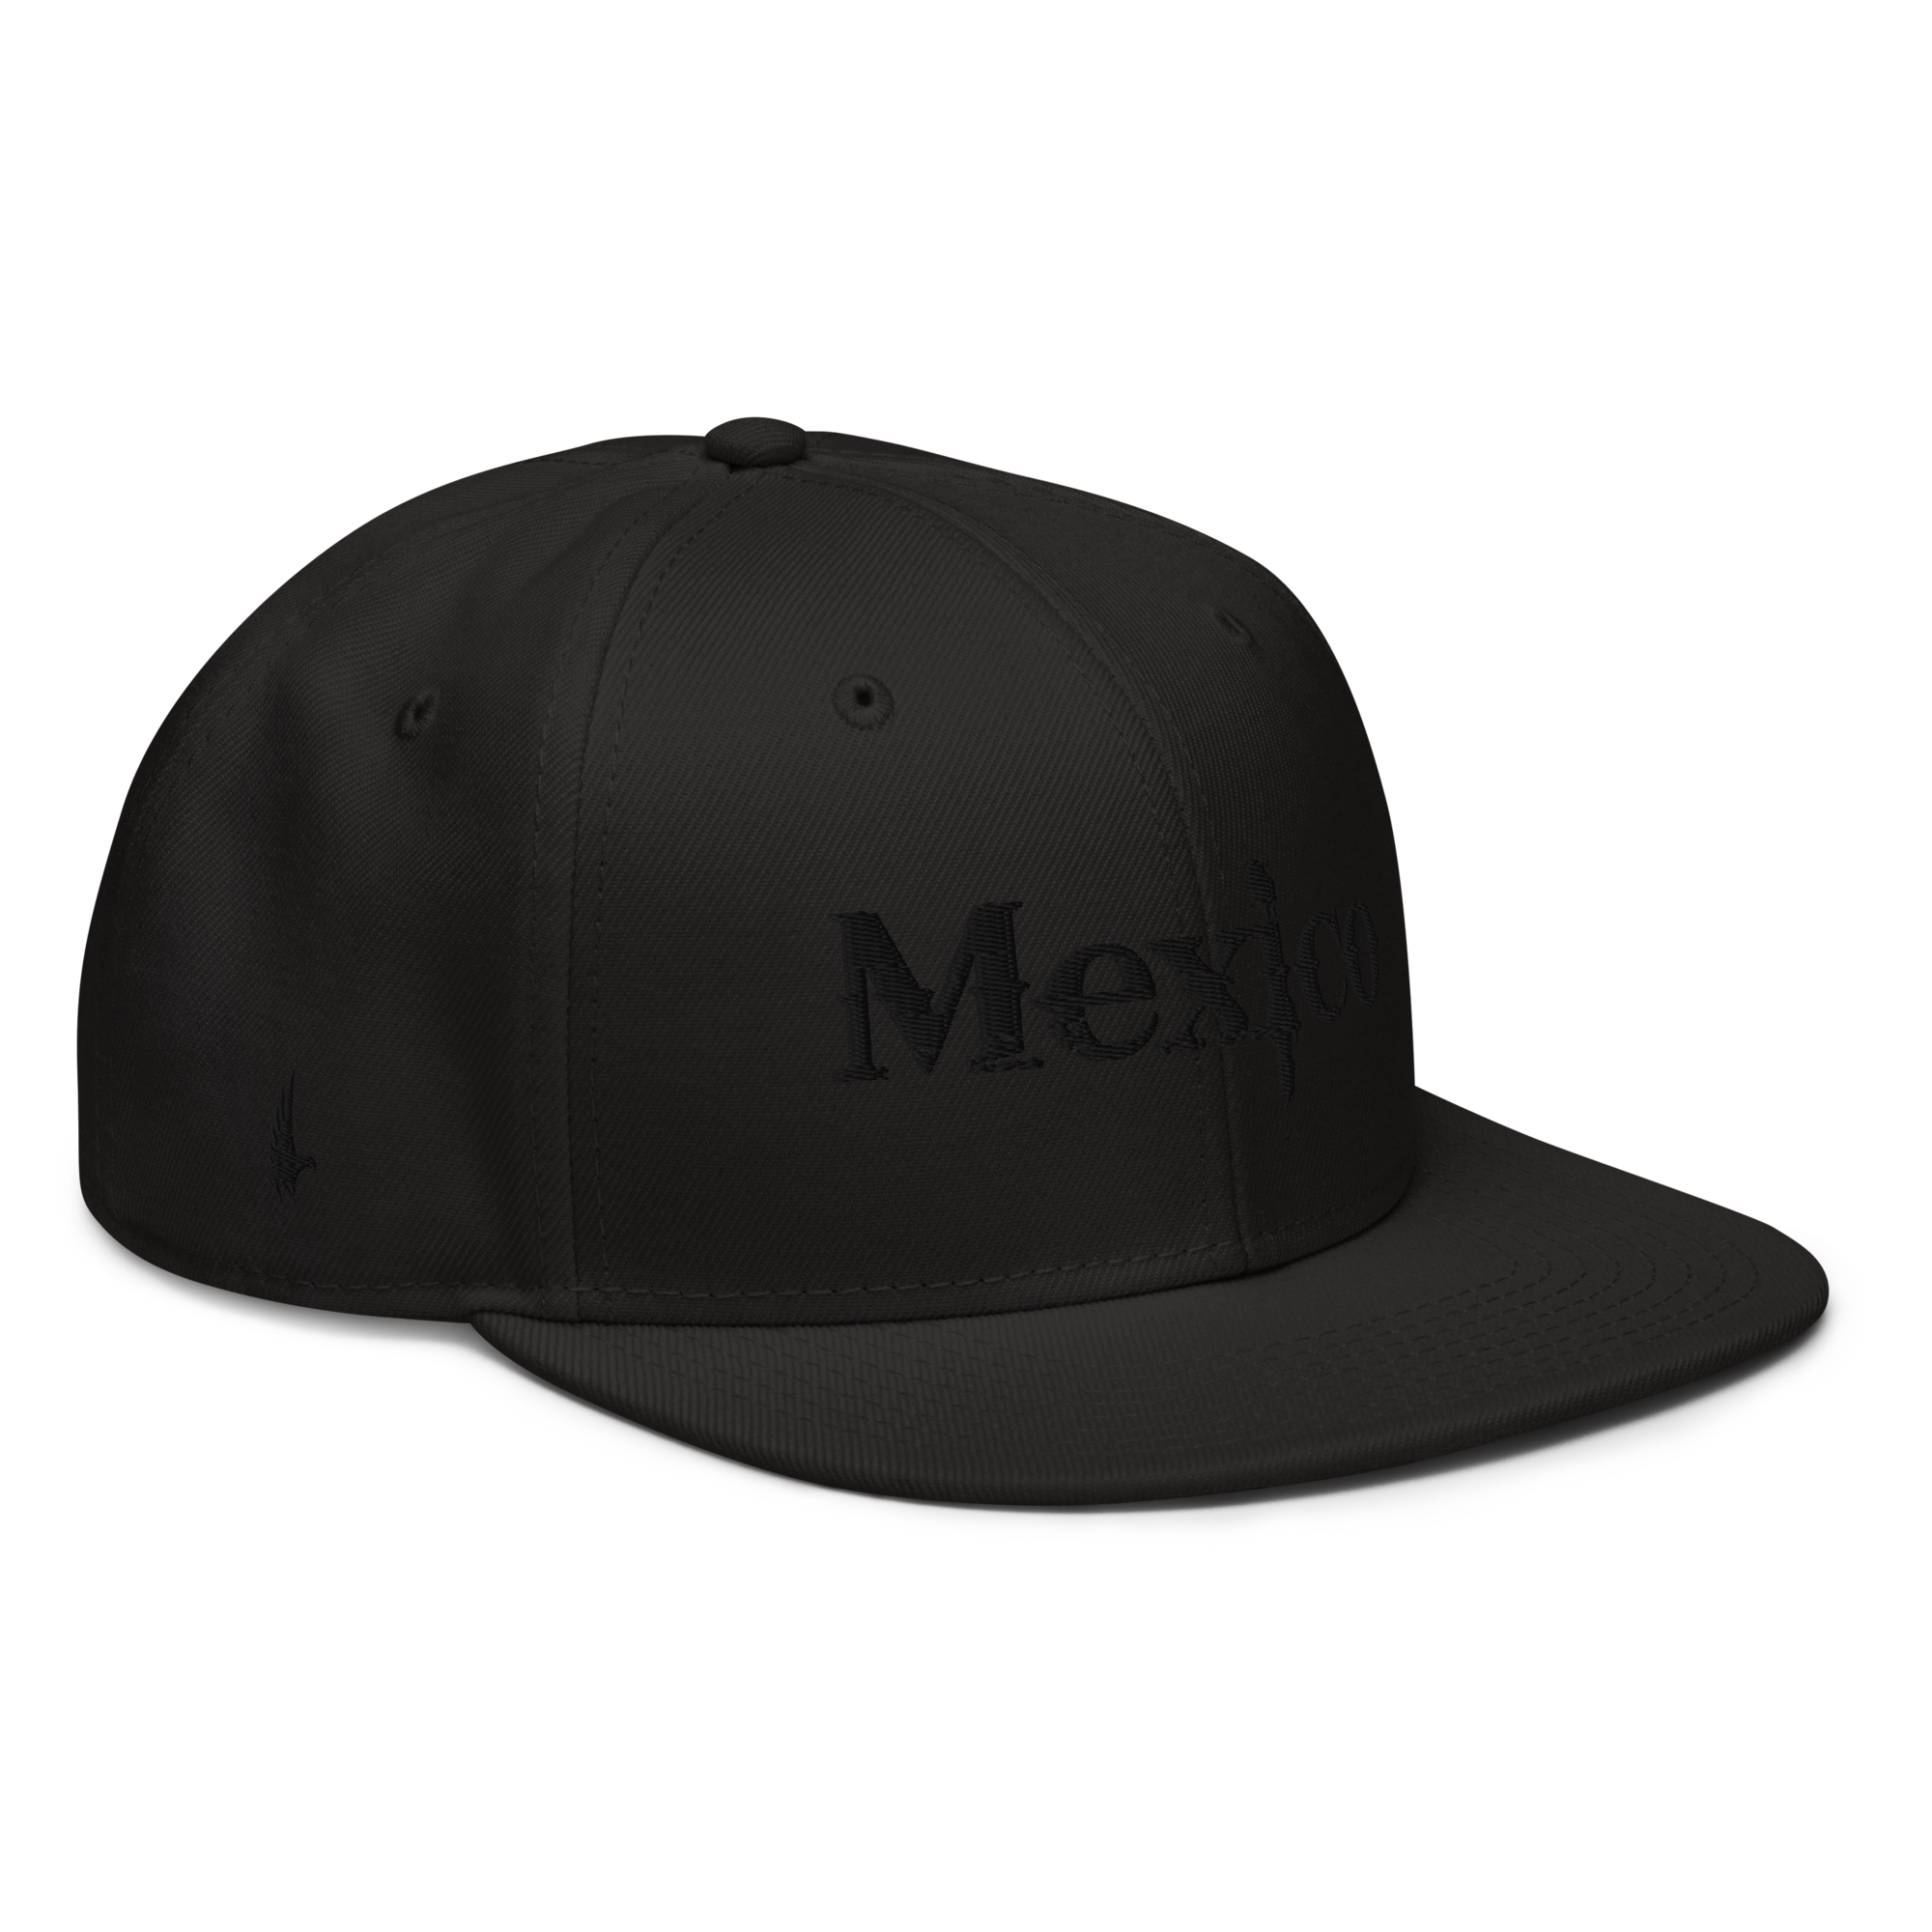 Mexico Snapback Hat - Black/Black OS - Loyalty Vibes